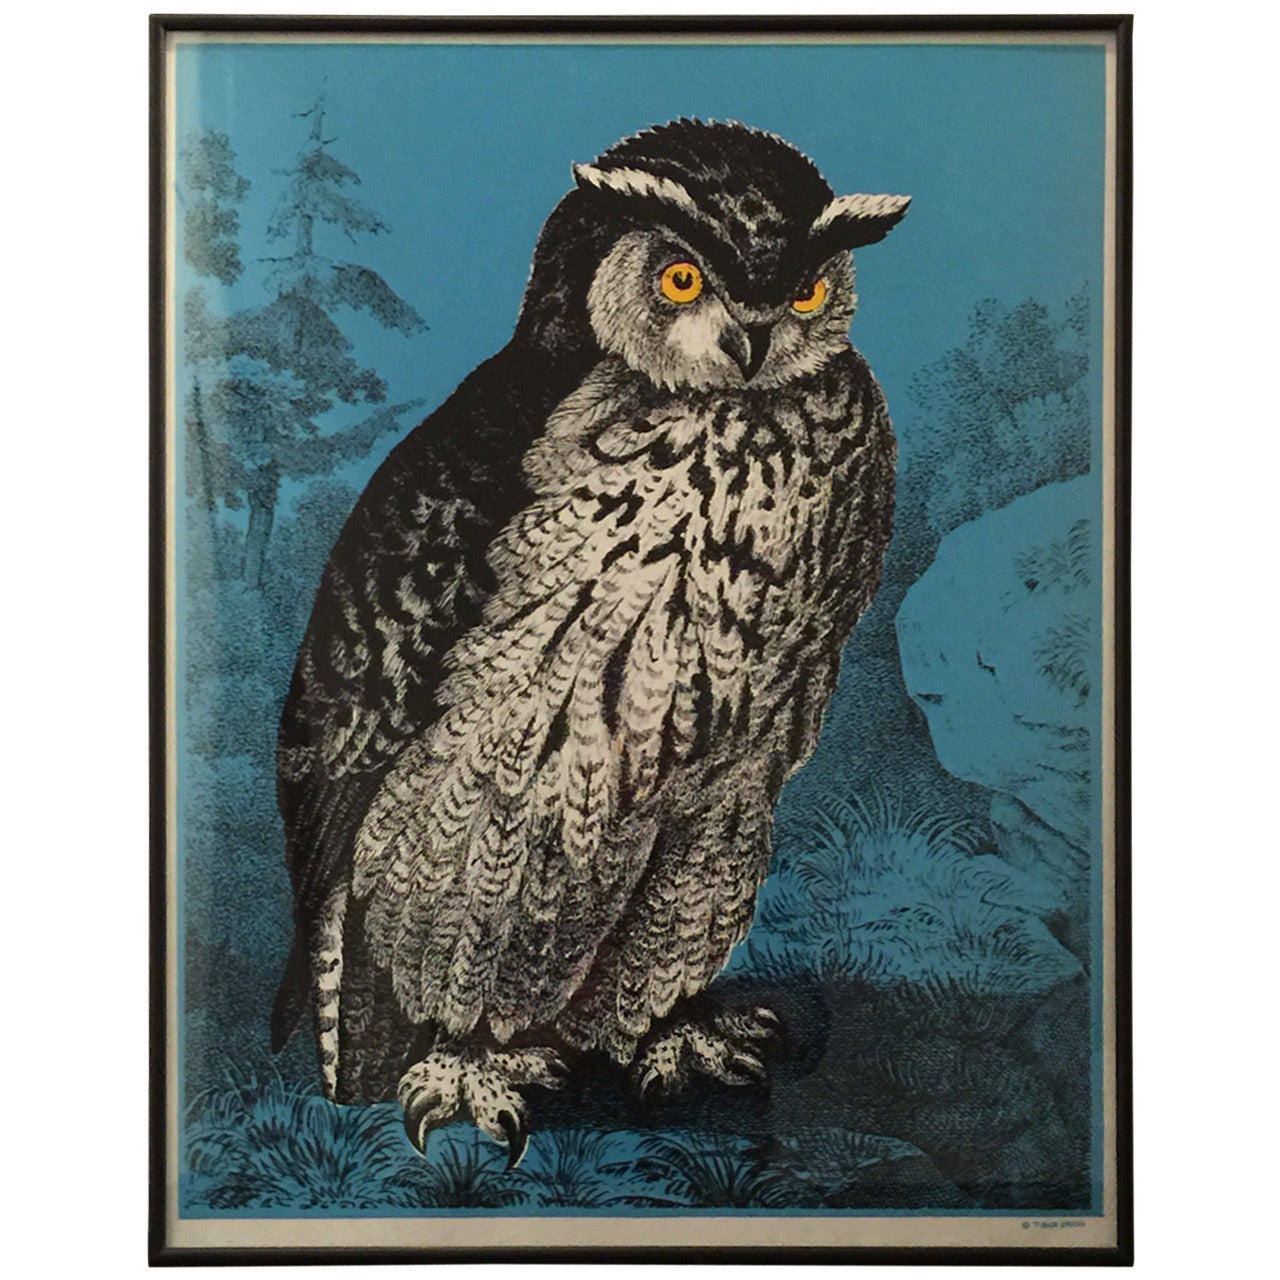 Vintage NYC Tiber Press Print of "Mr. Owl"